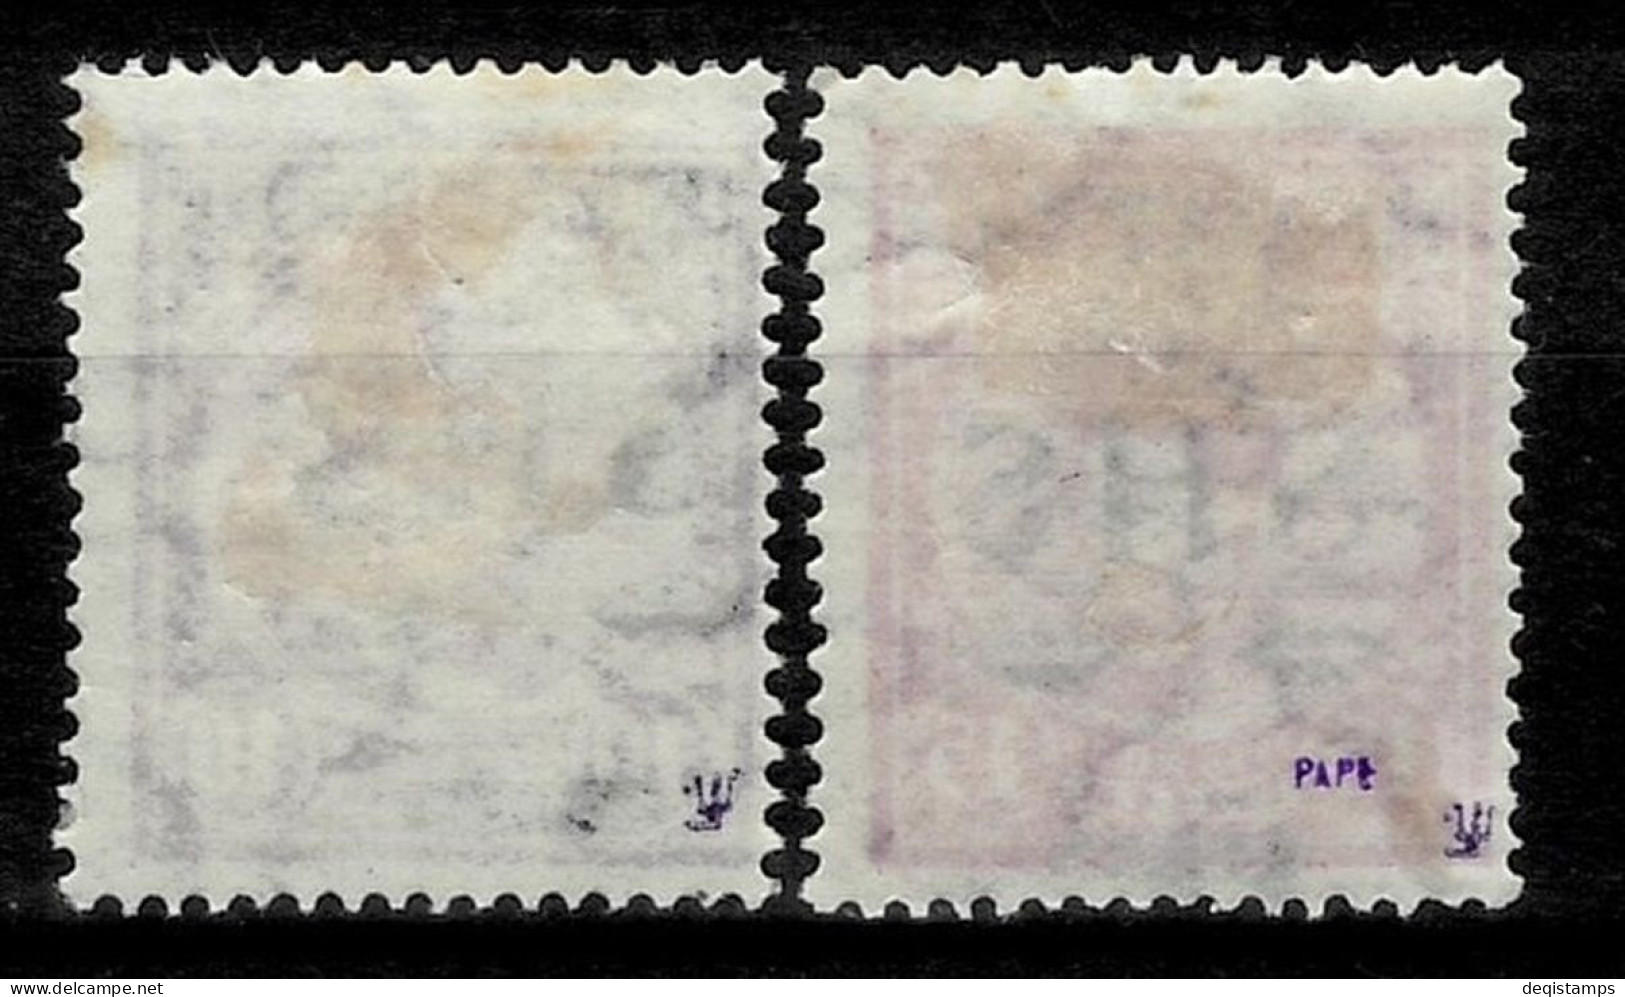 SHS - Croatia Stamps 1918  Coronation Set MI. 64/65  MH Signed - Ungebraucht